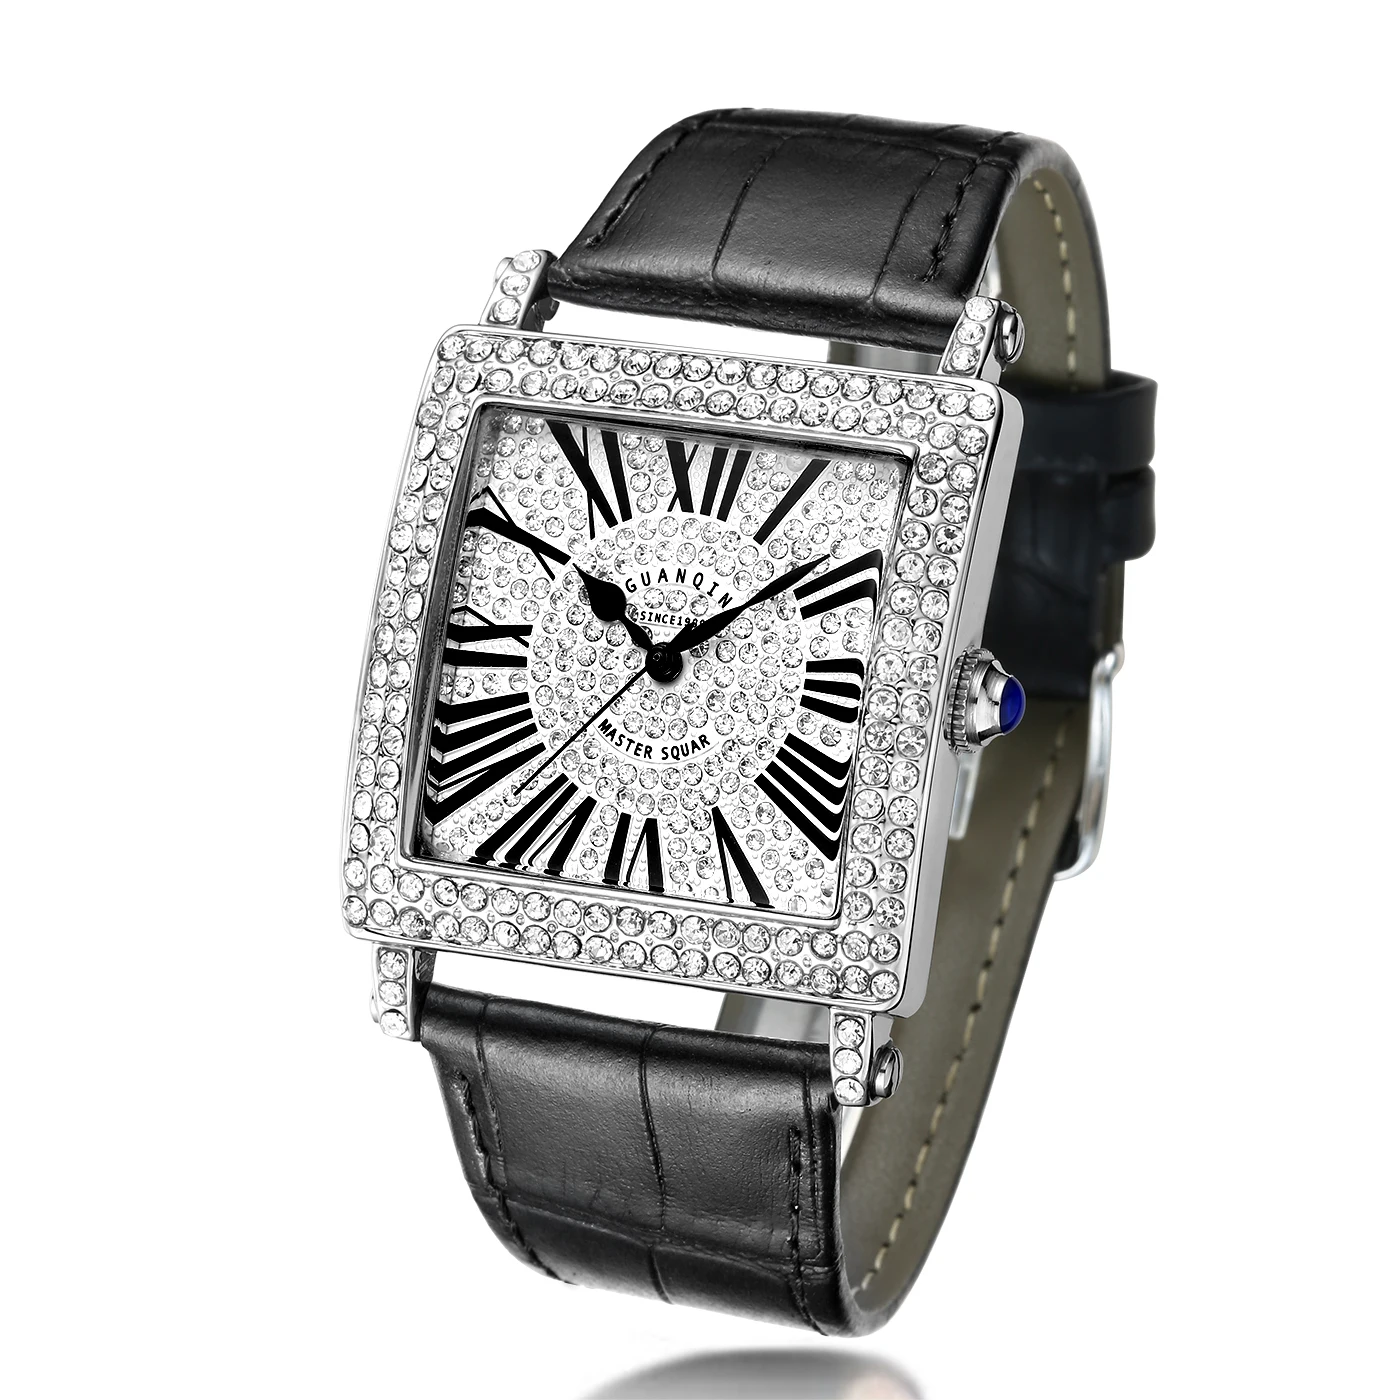 G08reloj mujer Women's Fashion Watches Magnet Buckle leather Diamond Quartz Watch Women Dress Clock relogio feminino enlarge